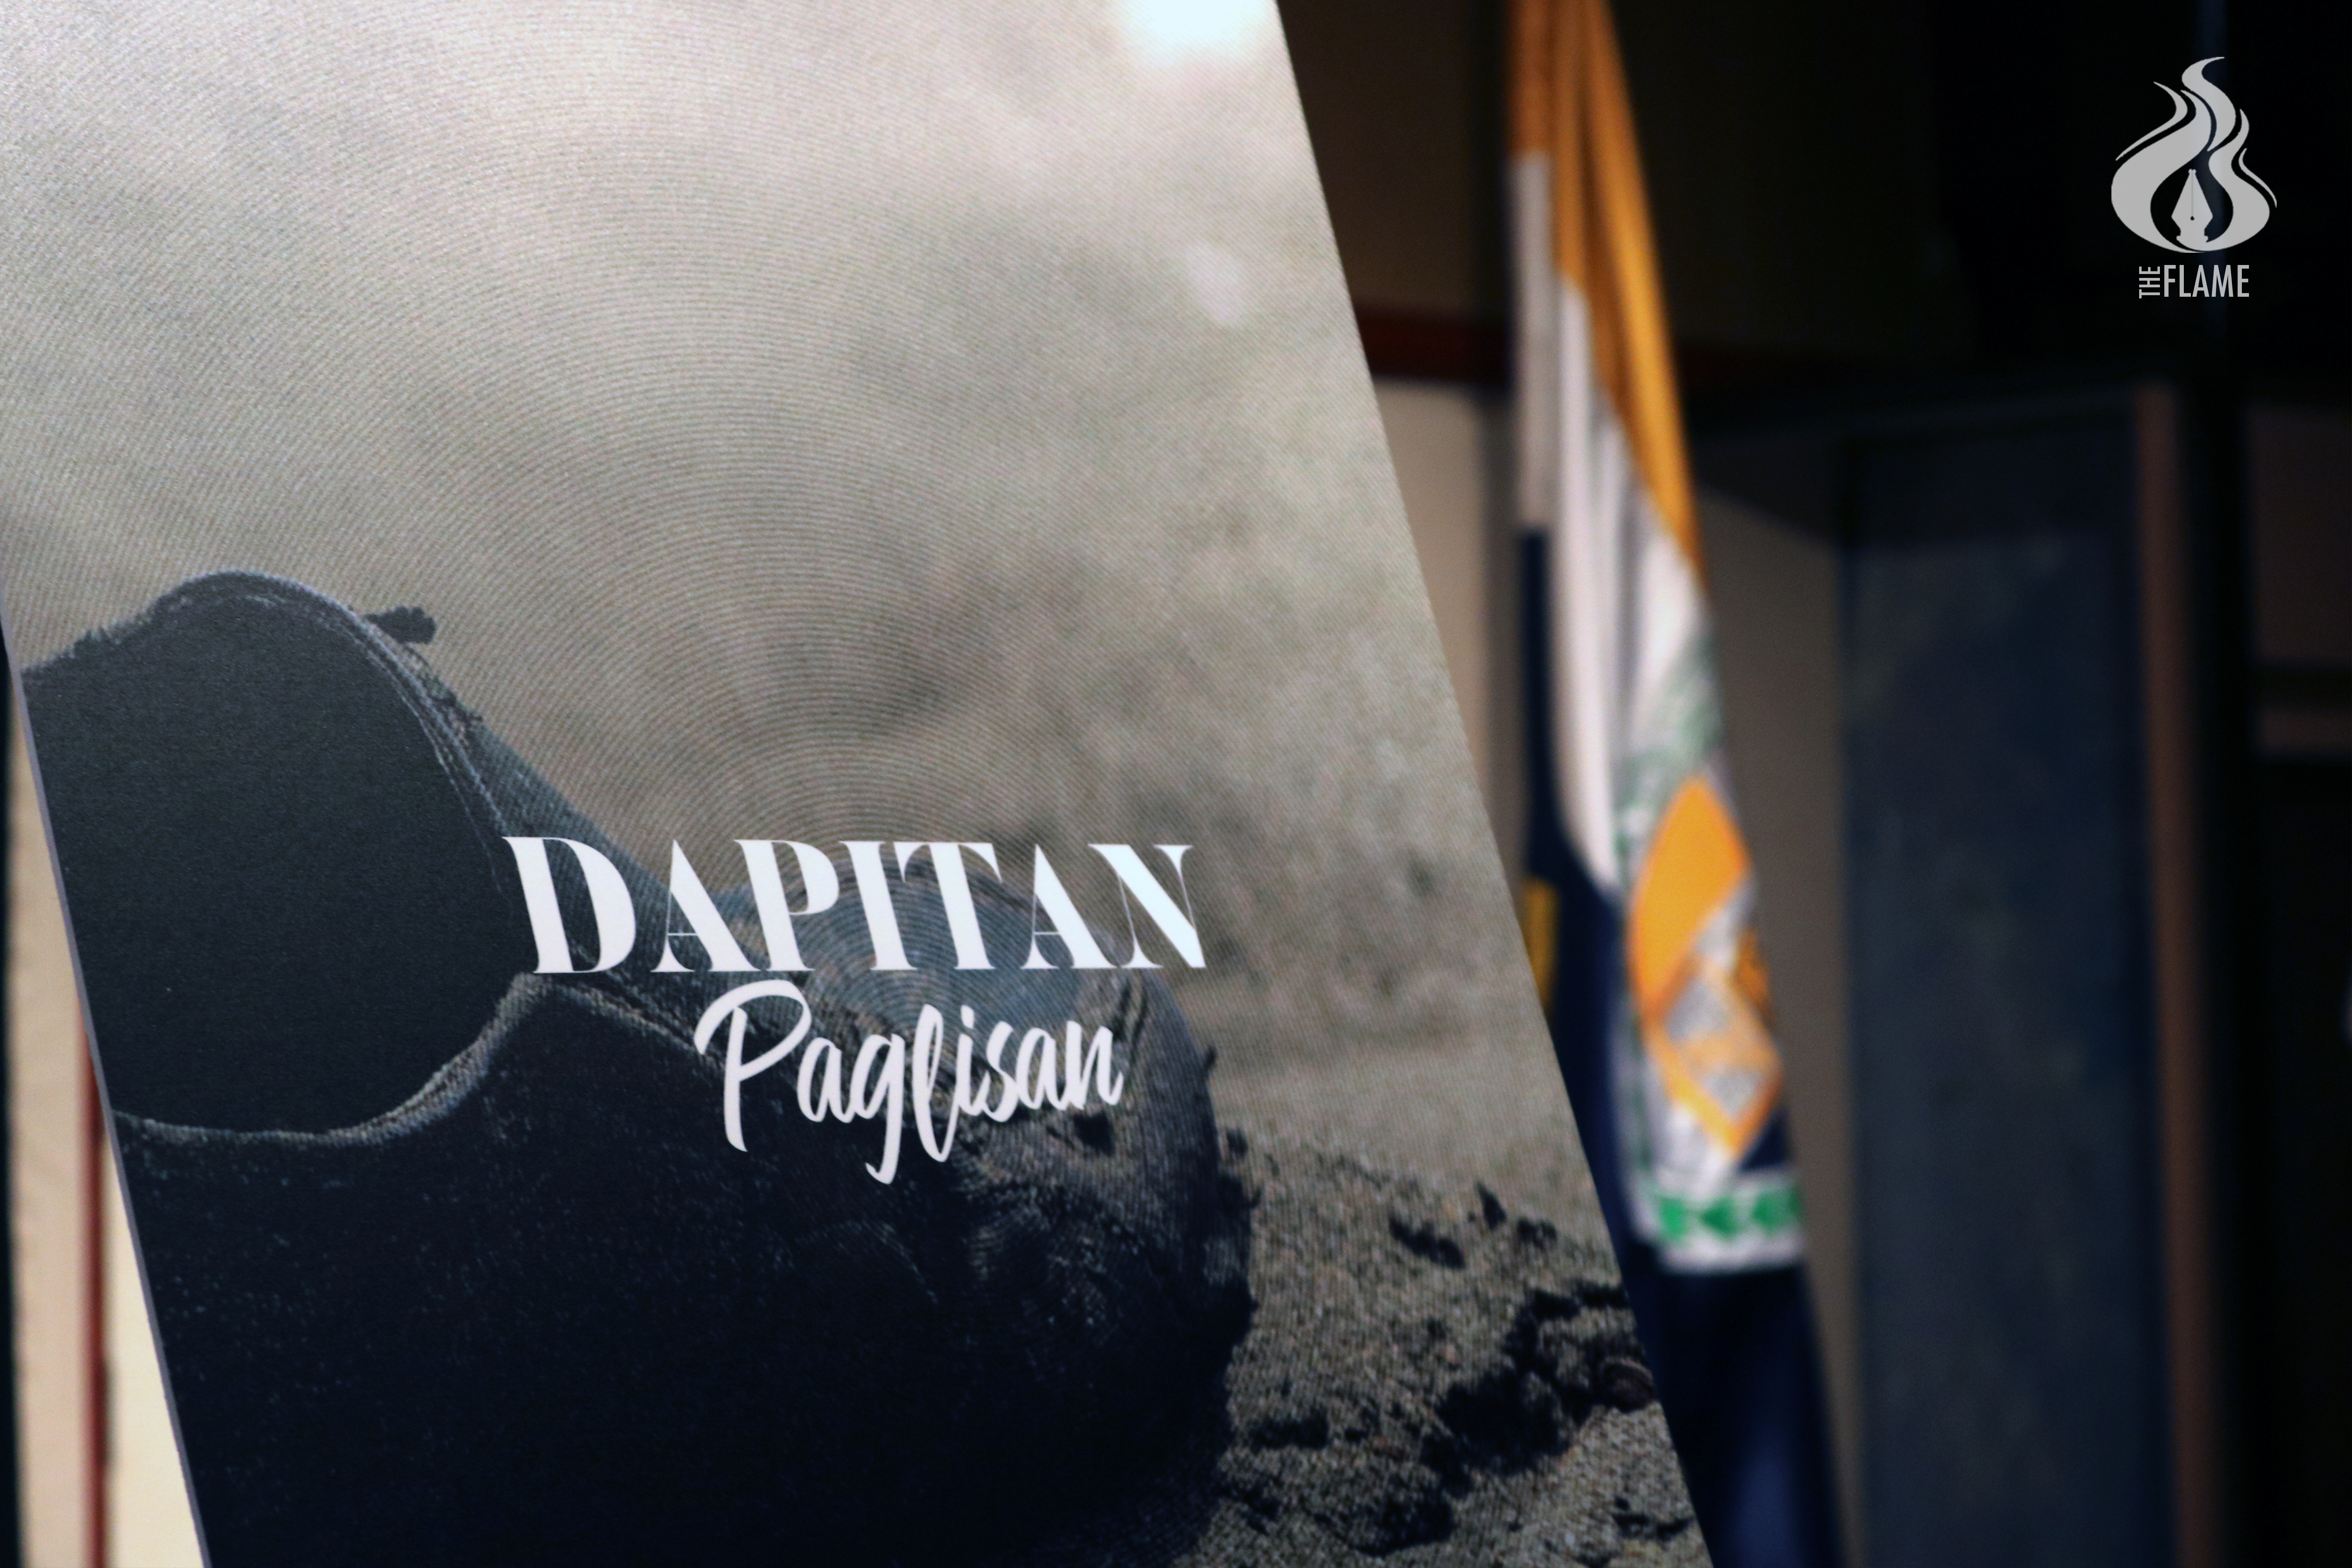 Dapitan 2017 features stories of departure